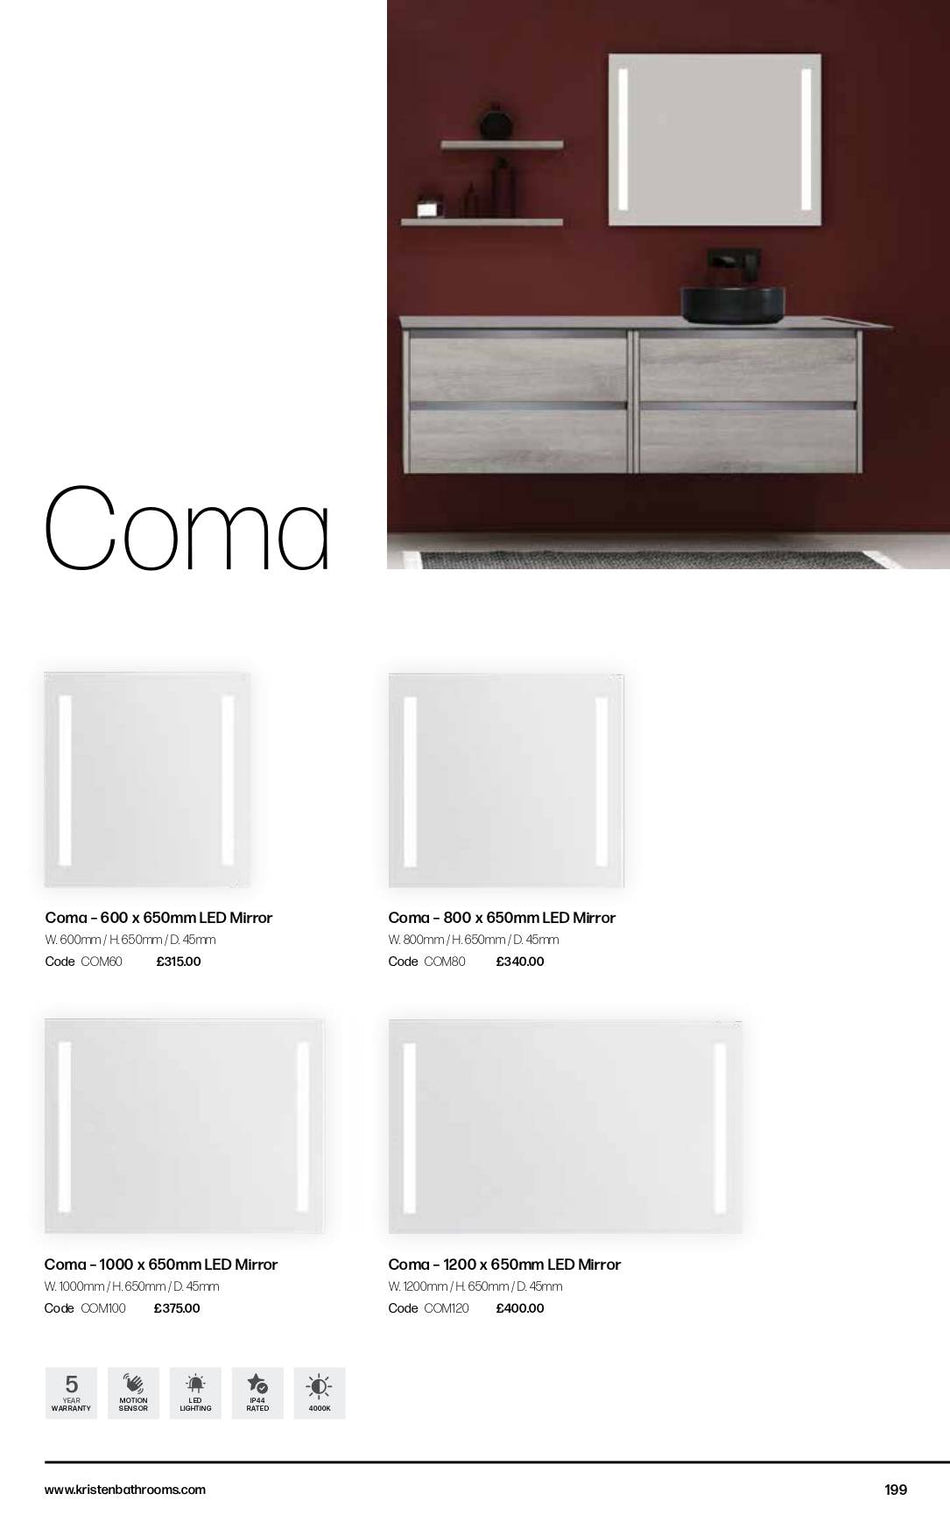 Coma – 600 x 650mm LED Mirror